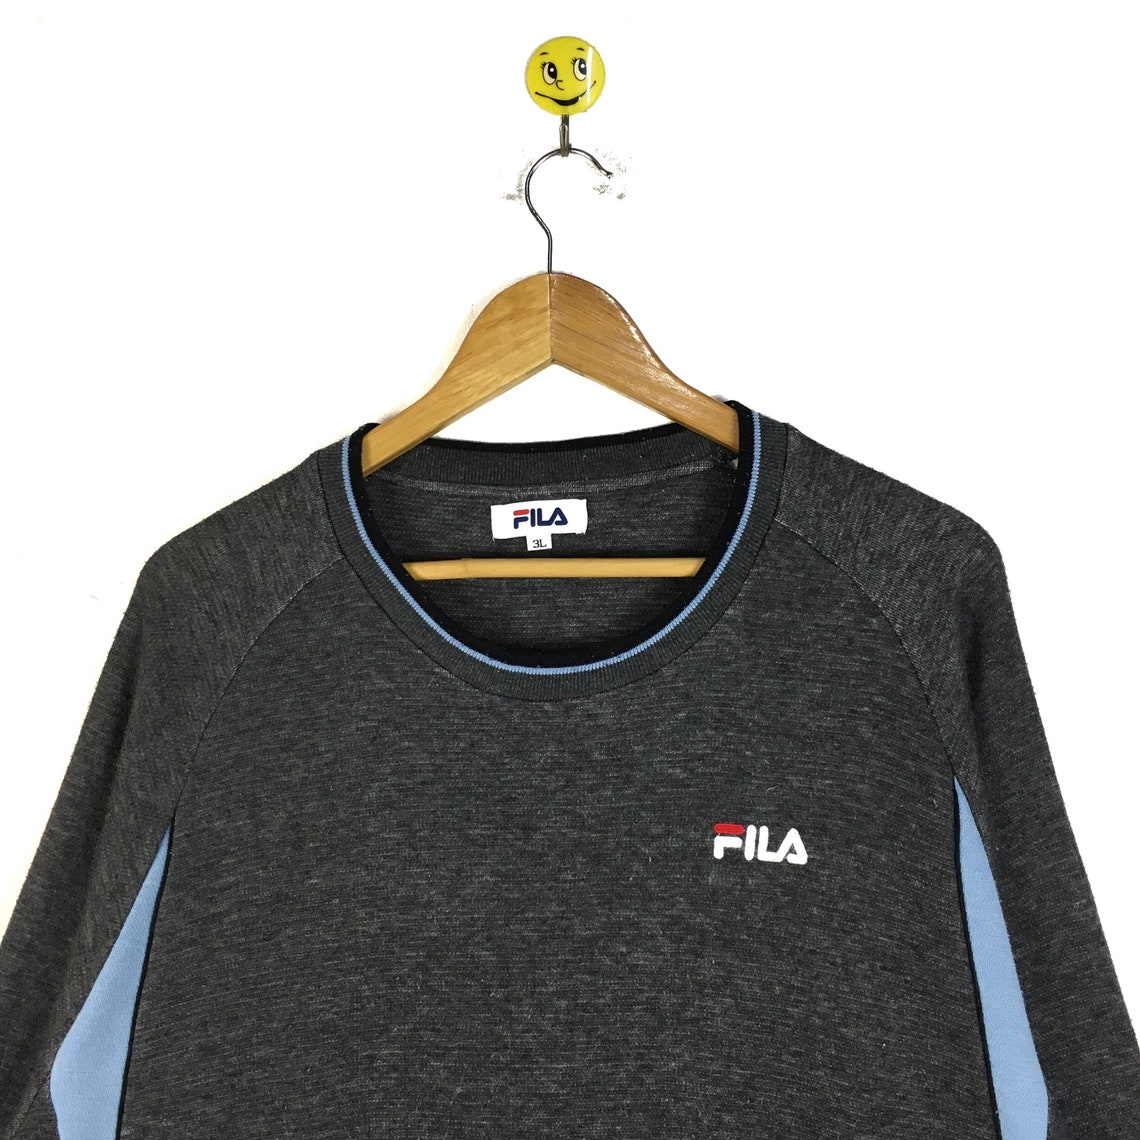 Rare Fila sweatshirt Fila pullover Fila sweater shirt jacket | Etsy